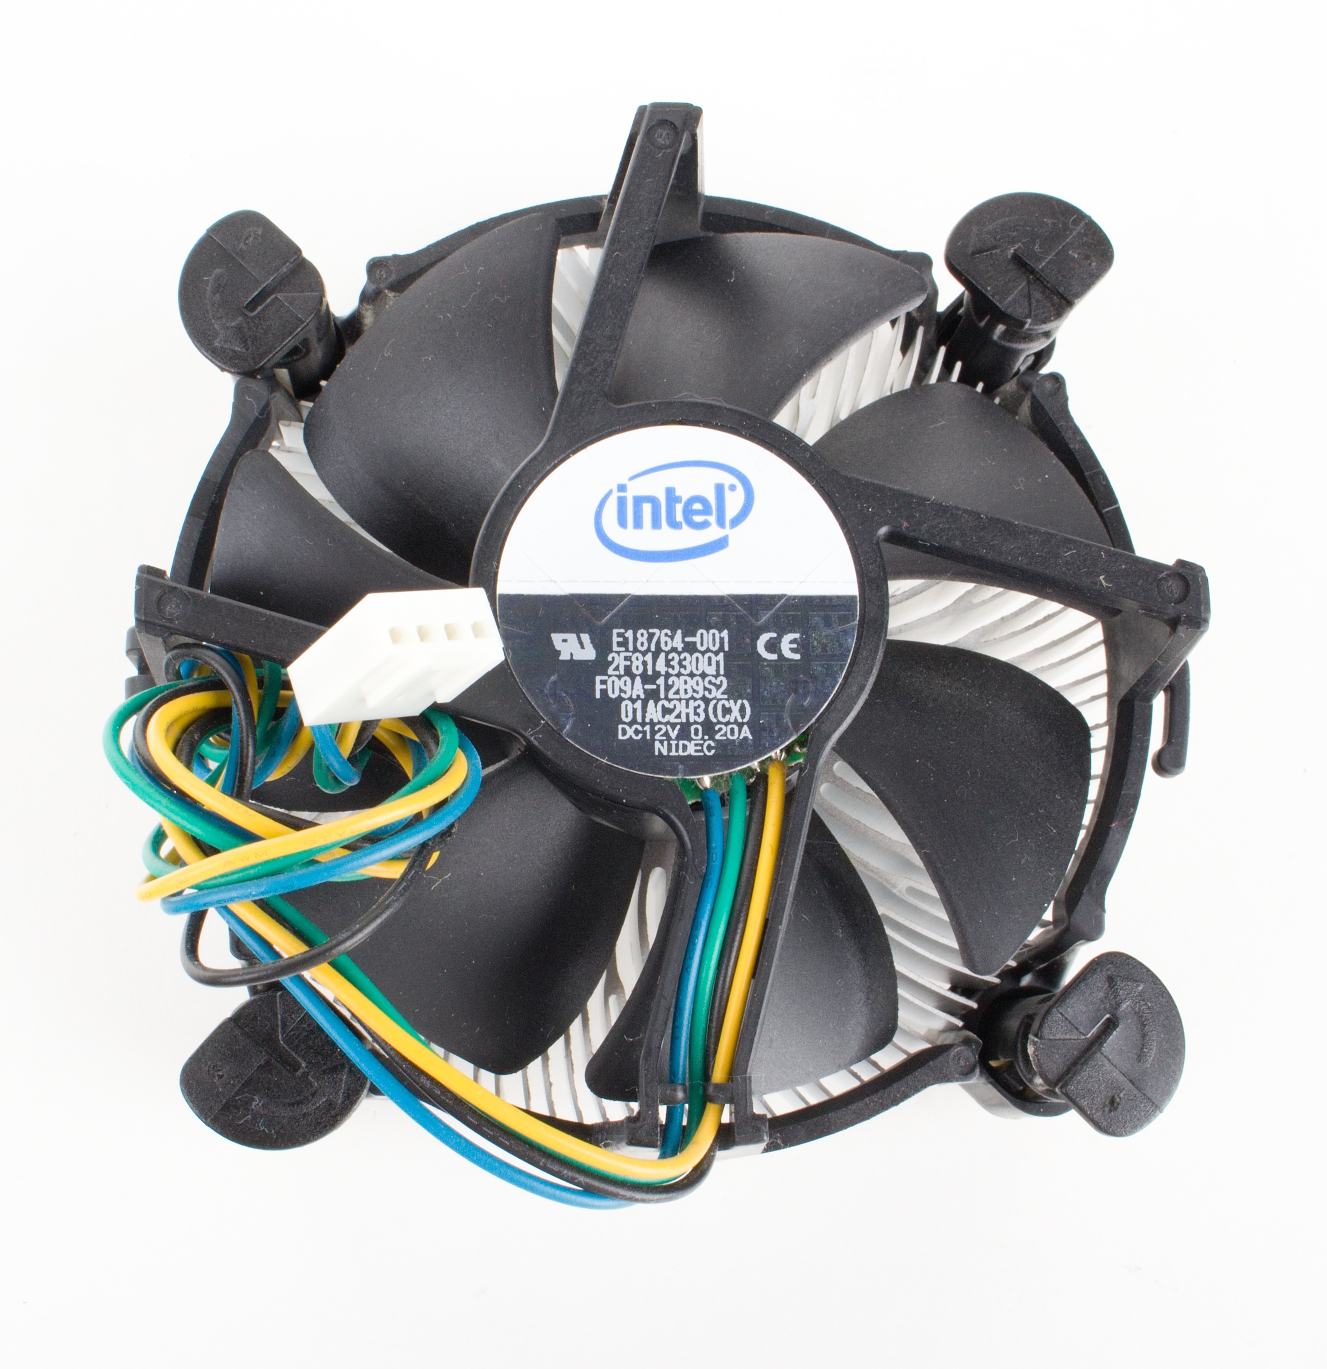 Chladič Intel E18764-001 pro socket LGA775 4 pin